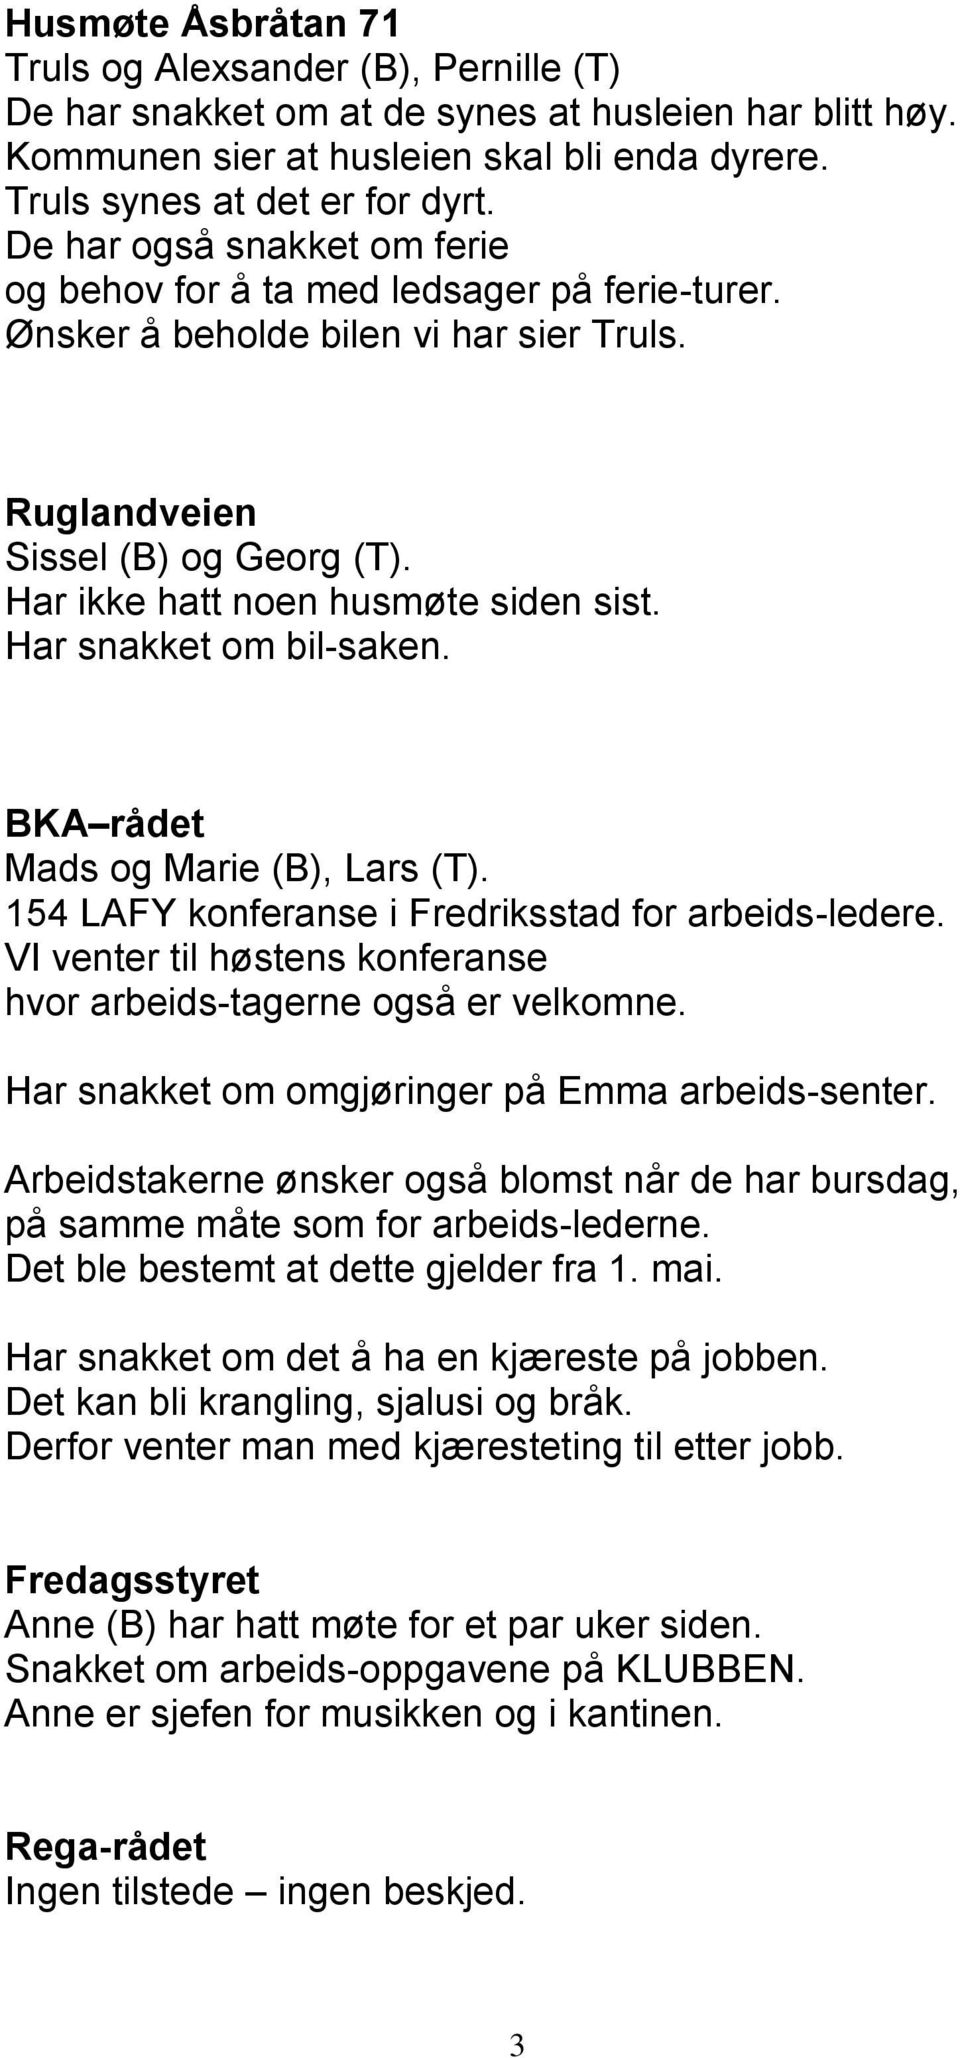 Har snakket om bil-saken. BKA rådet Mads og Marie (B), Lars (T). 154 LAFY konferanse i Fredriksstad for arbeids-ledere. VI venter til høstens konferanse hvor arbeids-tagerne også er velkomne.